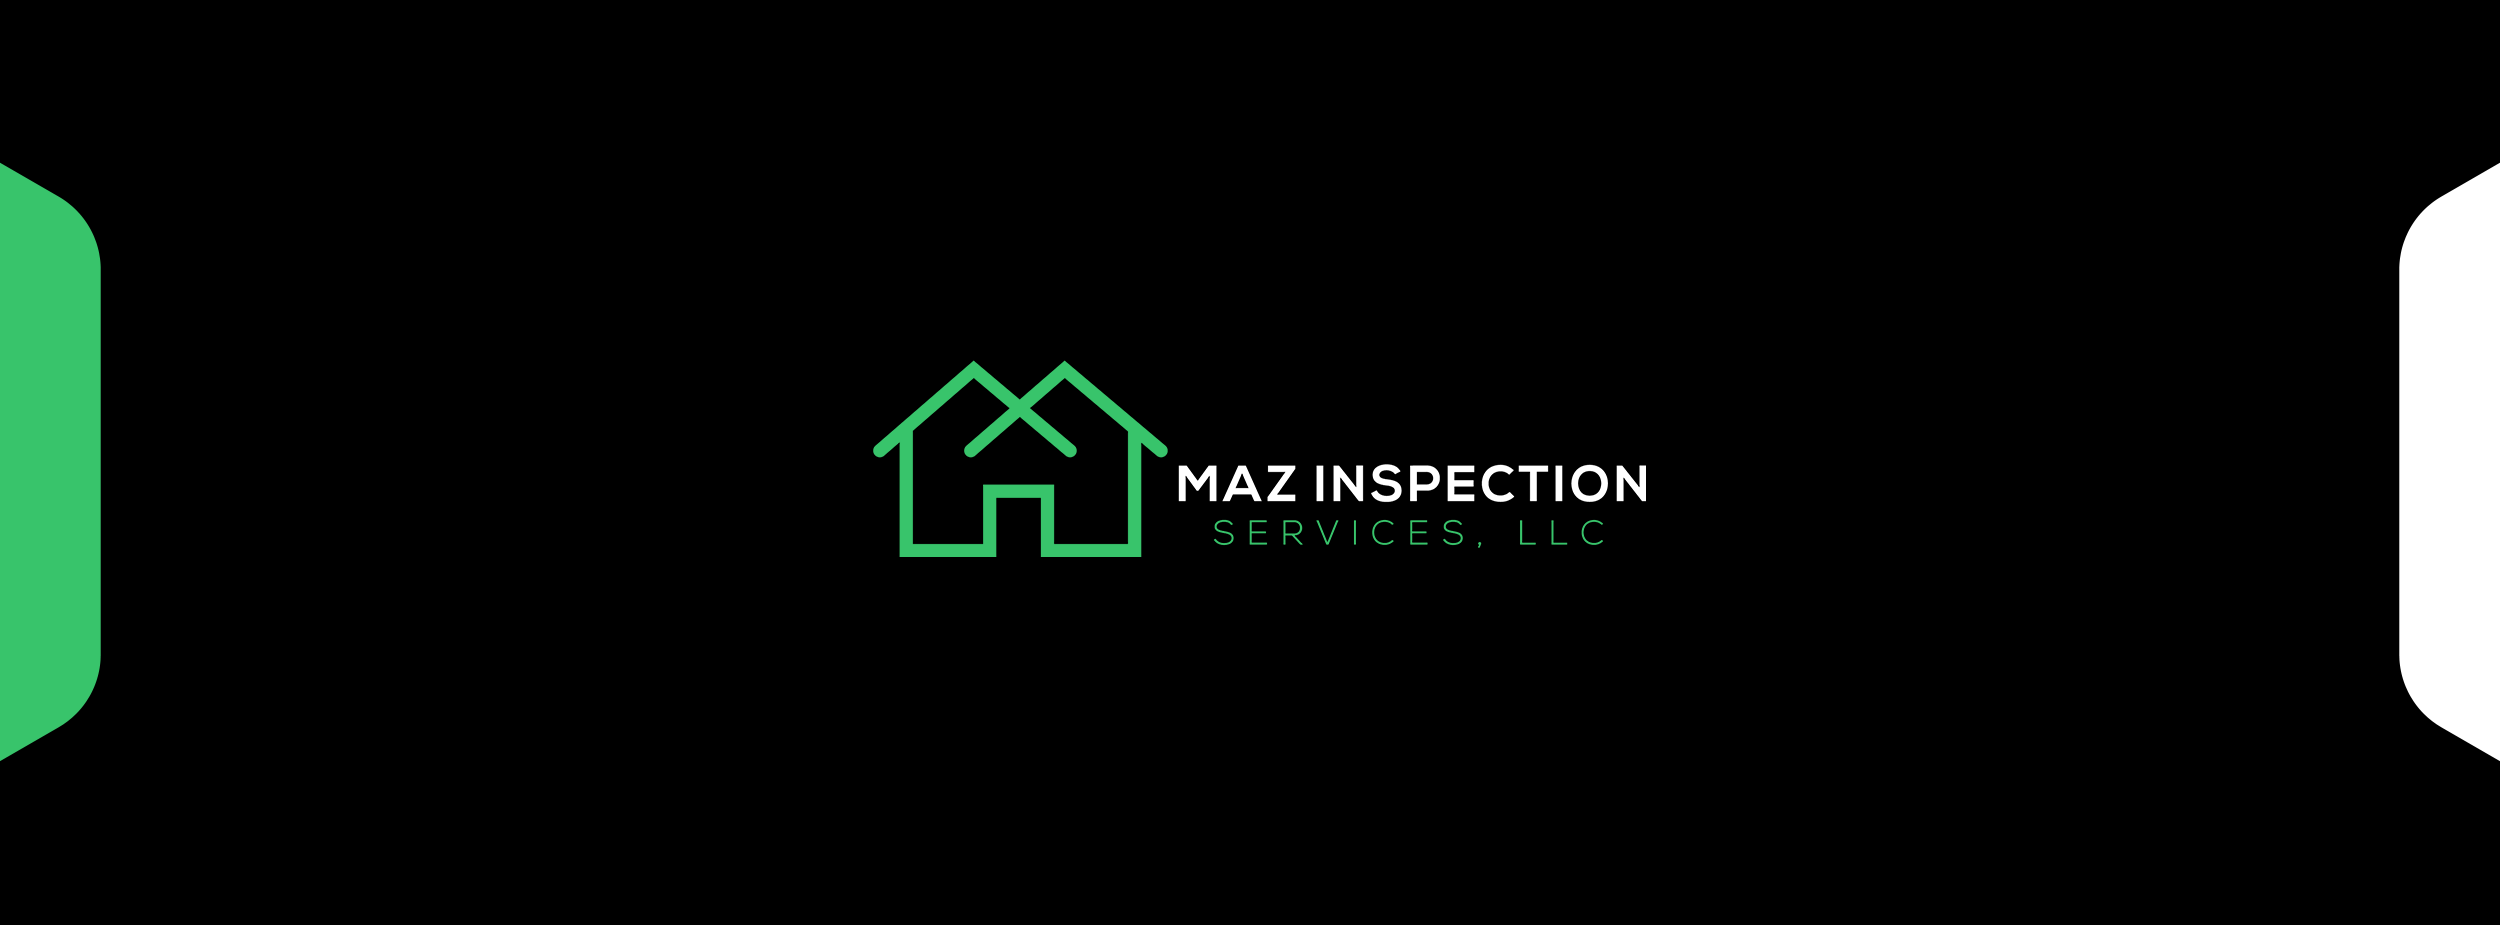 Maz Inspection Services, LLC Logo